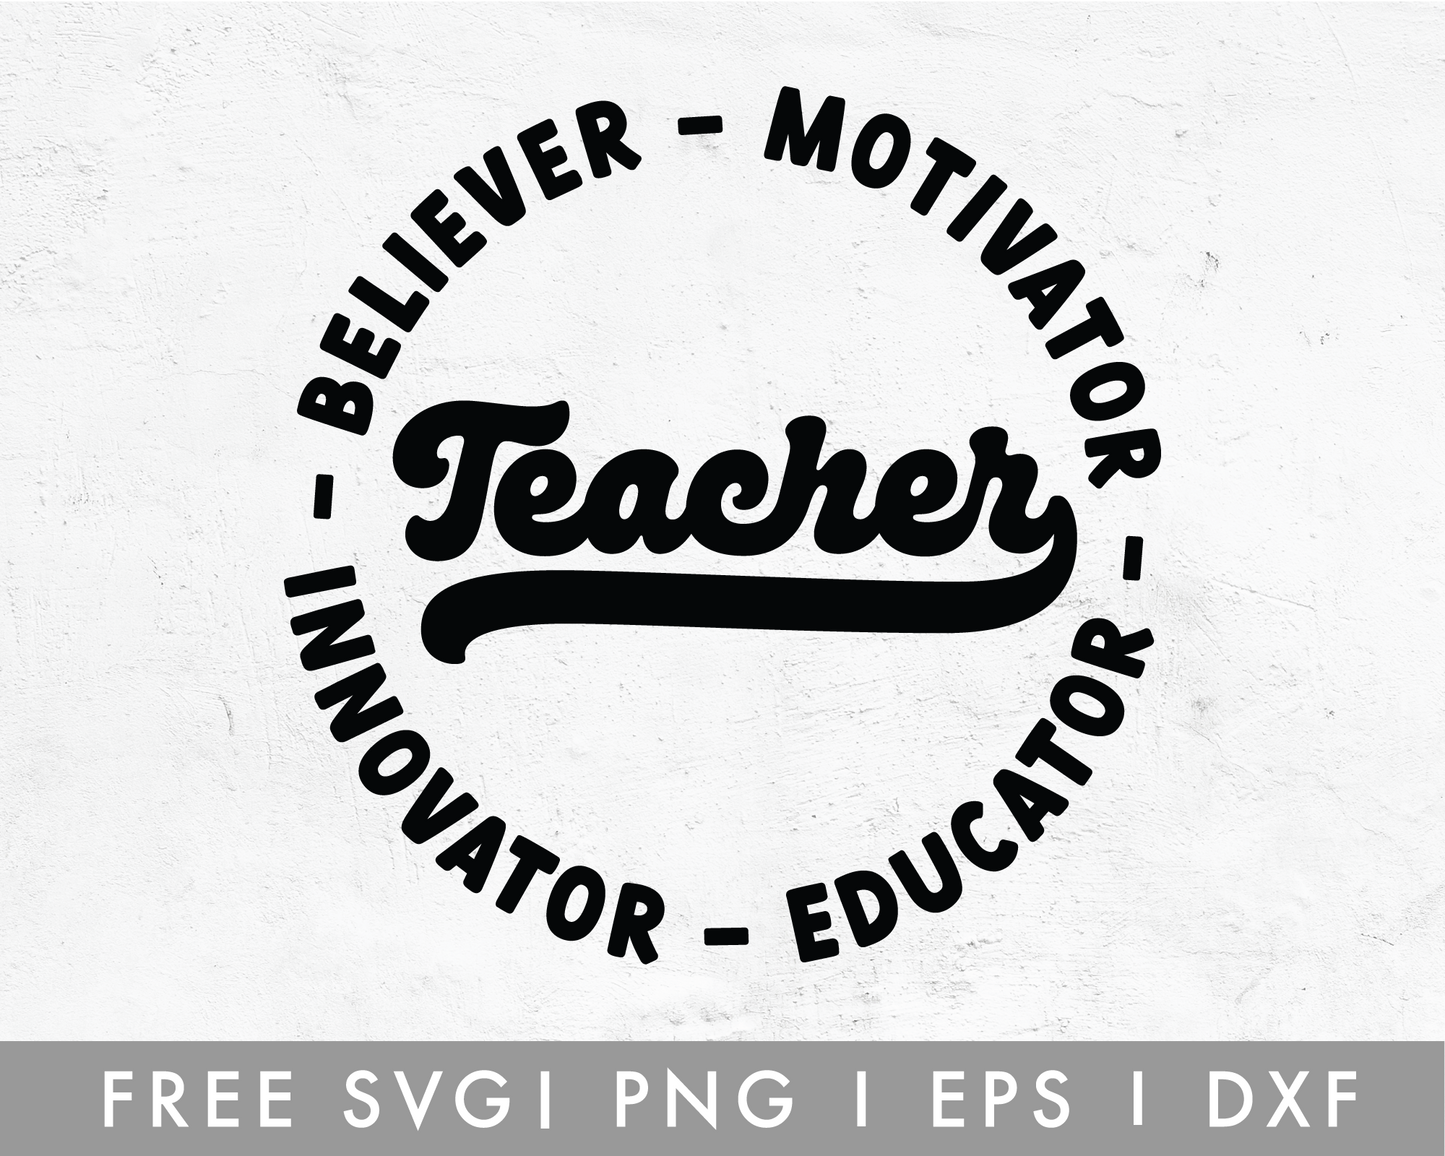 FREE Circle Teacher SVG